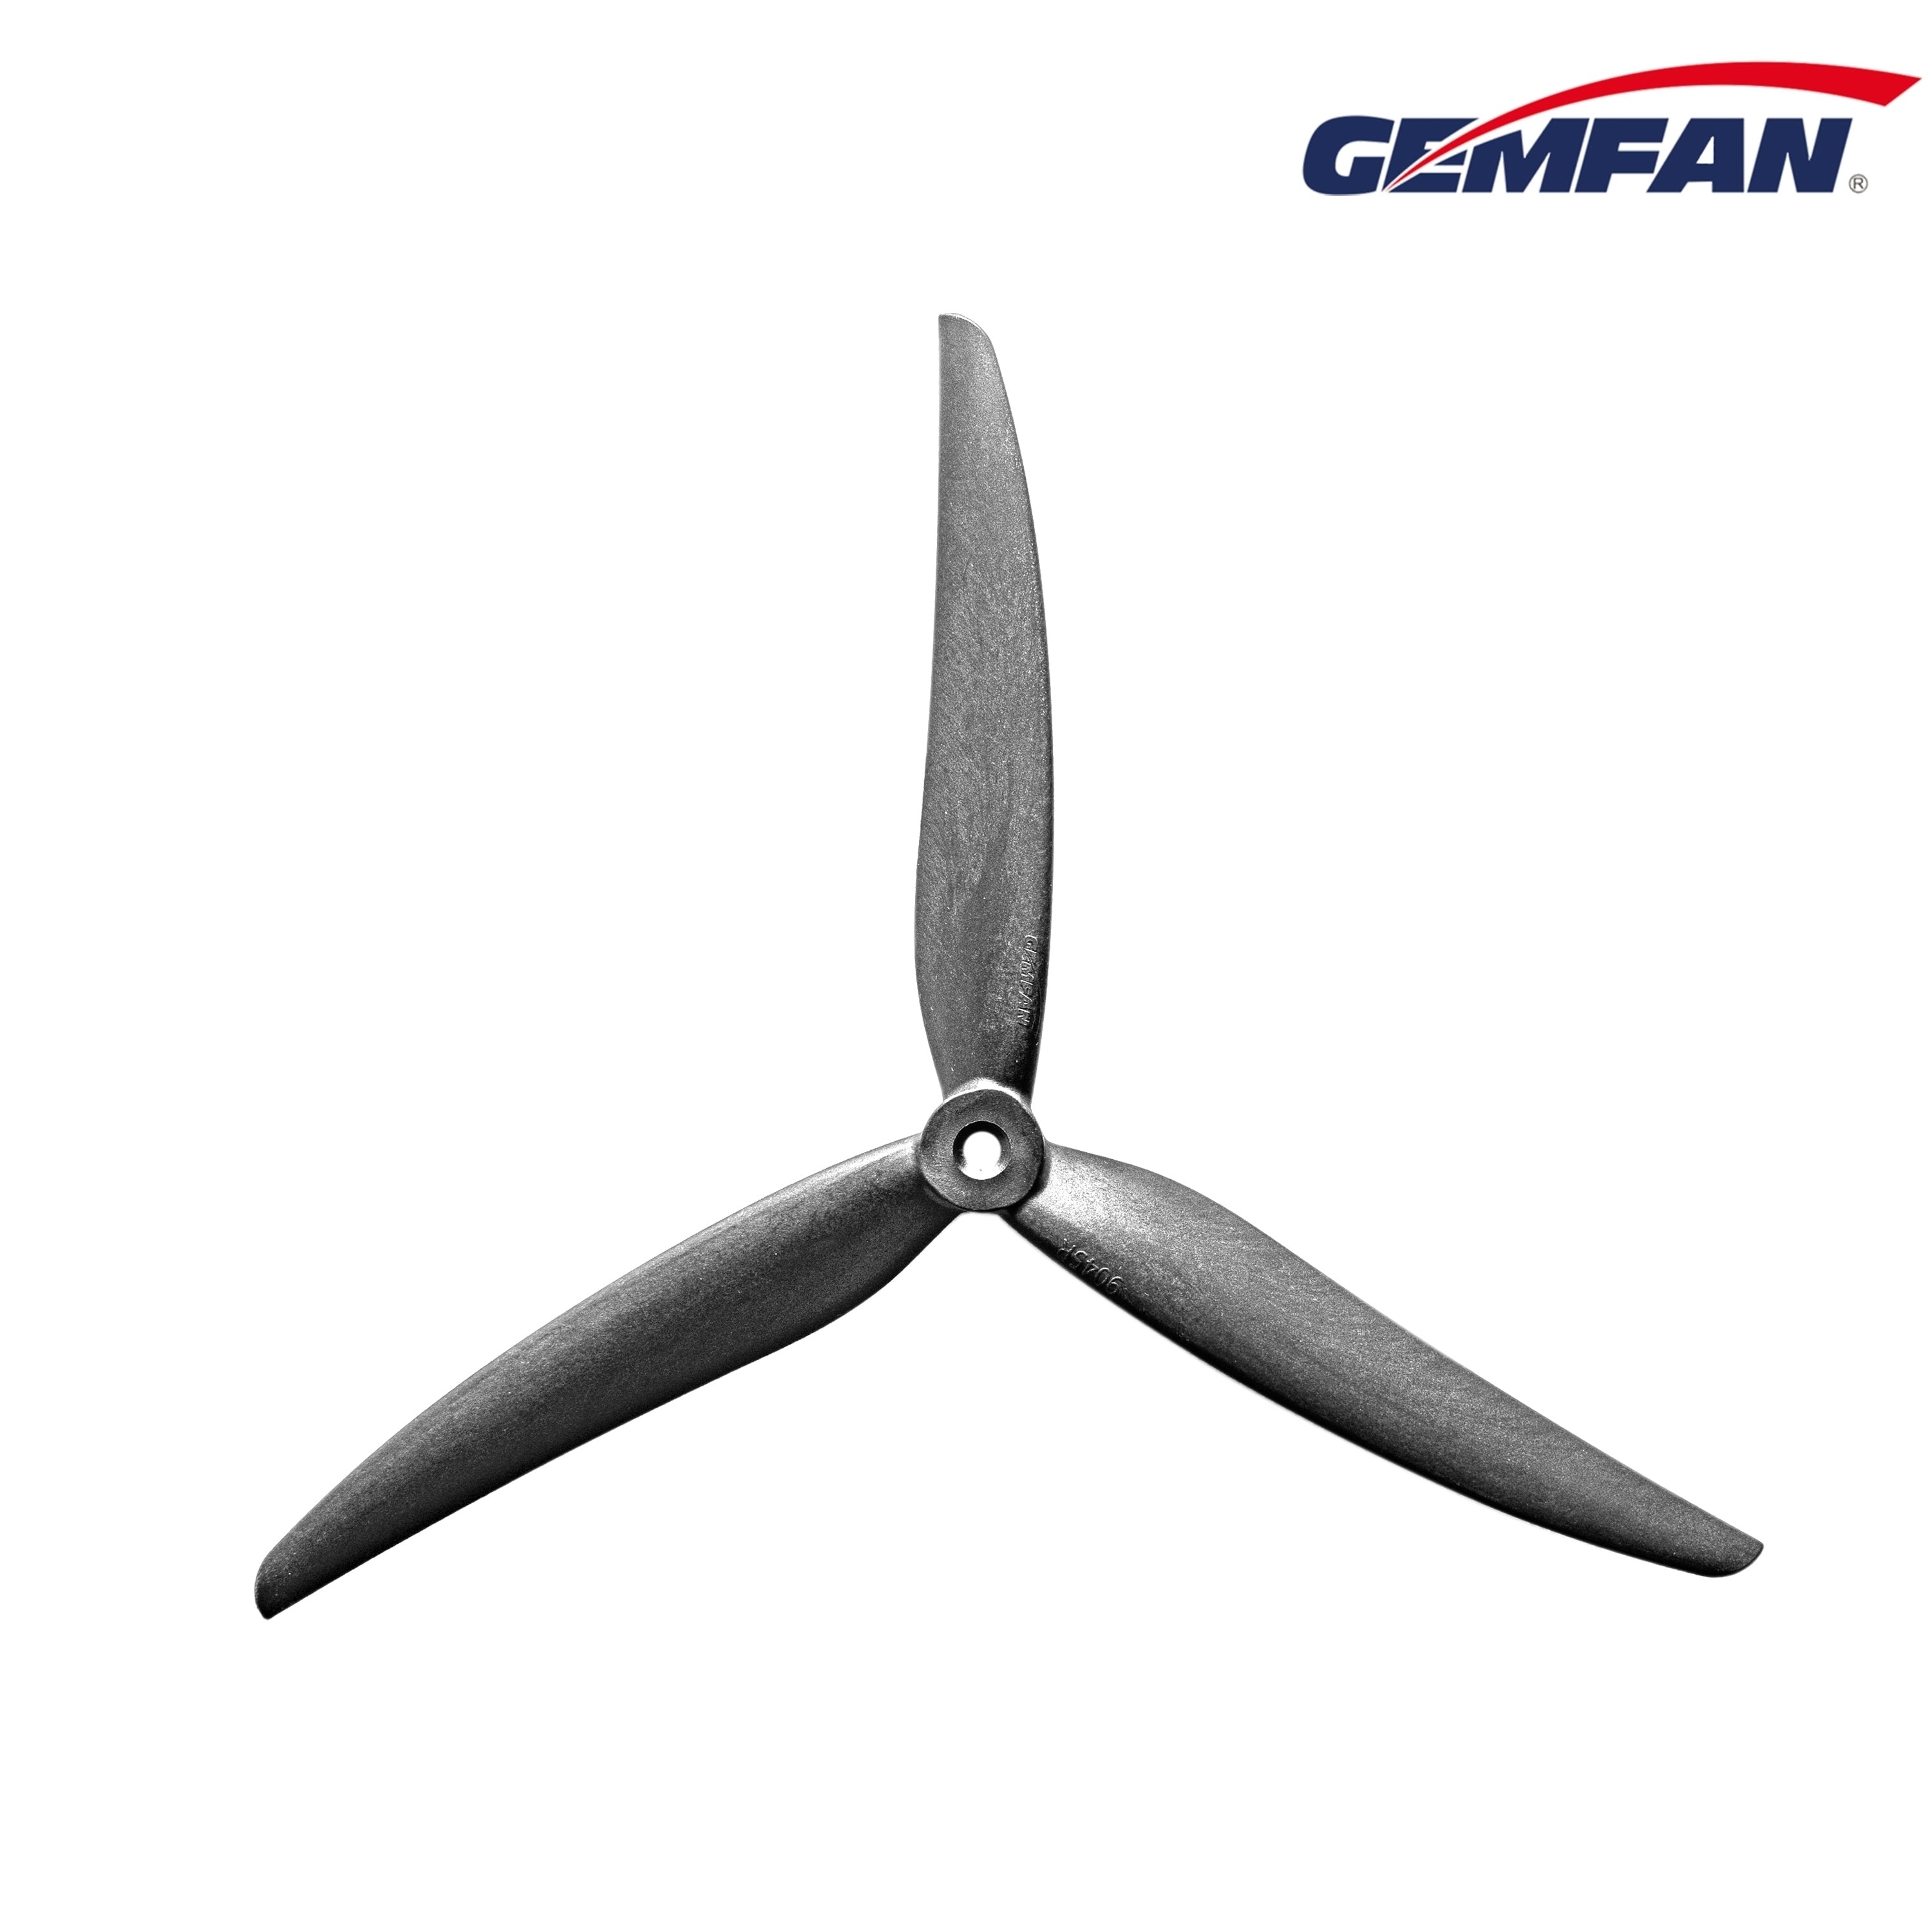 Gemfan CL Cinelifter 9045 Carbon Nylon 3-Blade Propeller (1CW+1CCW)